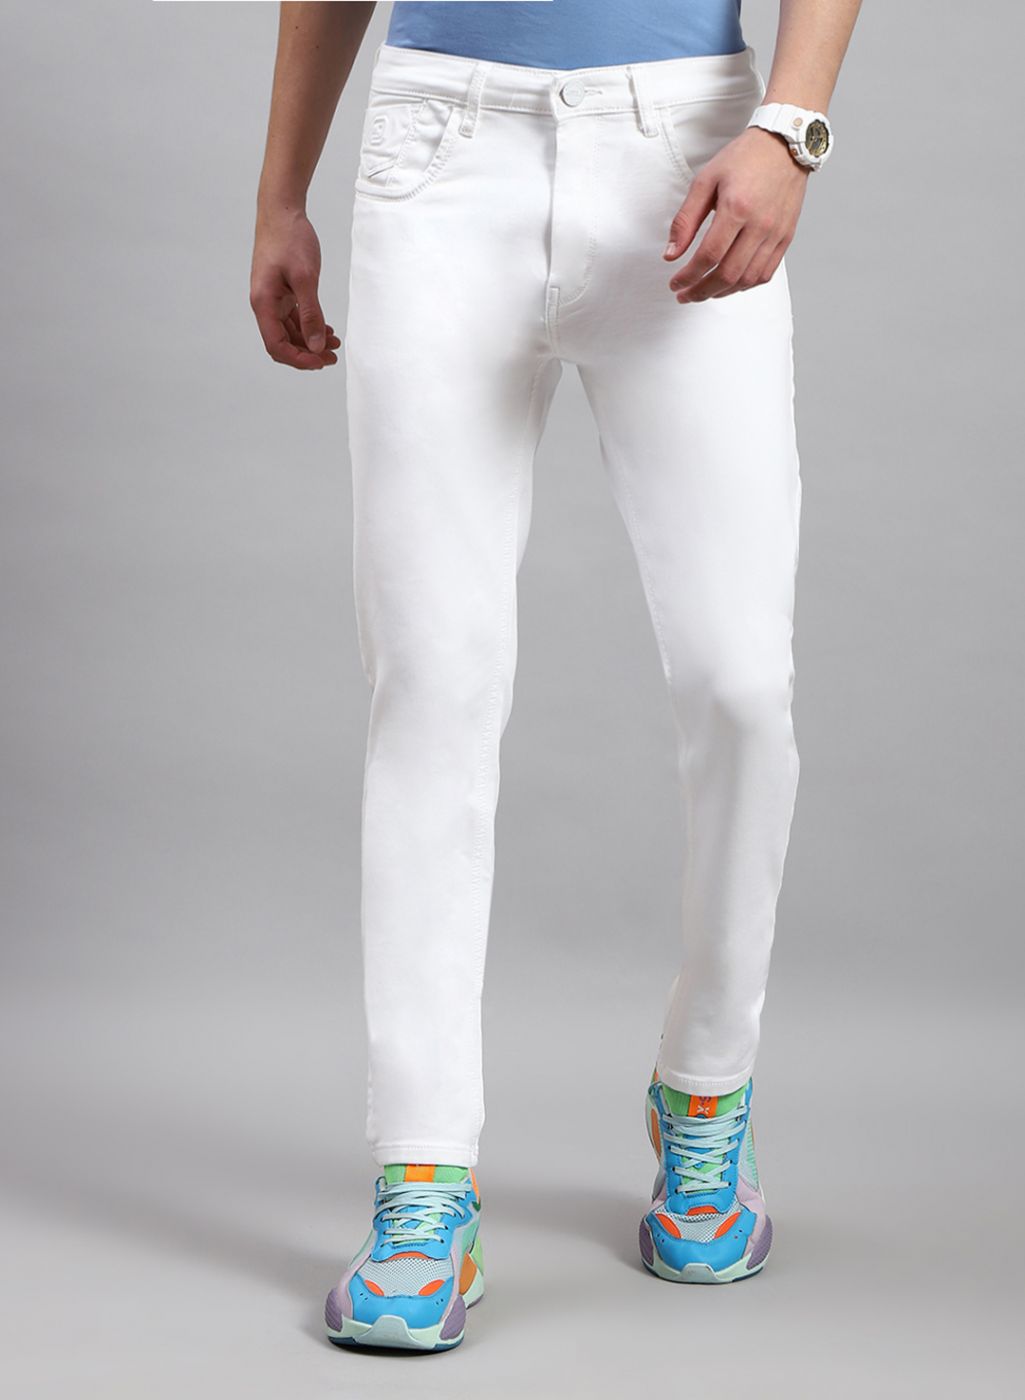 Men's White Jeans | Explore our New Arrivals | ZARA India